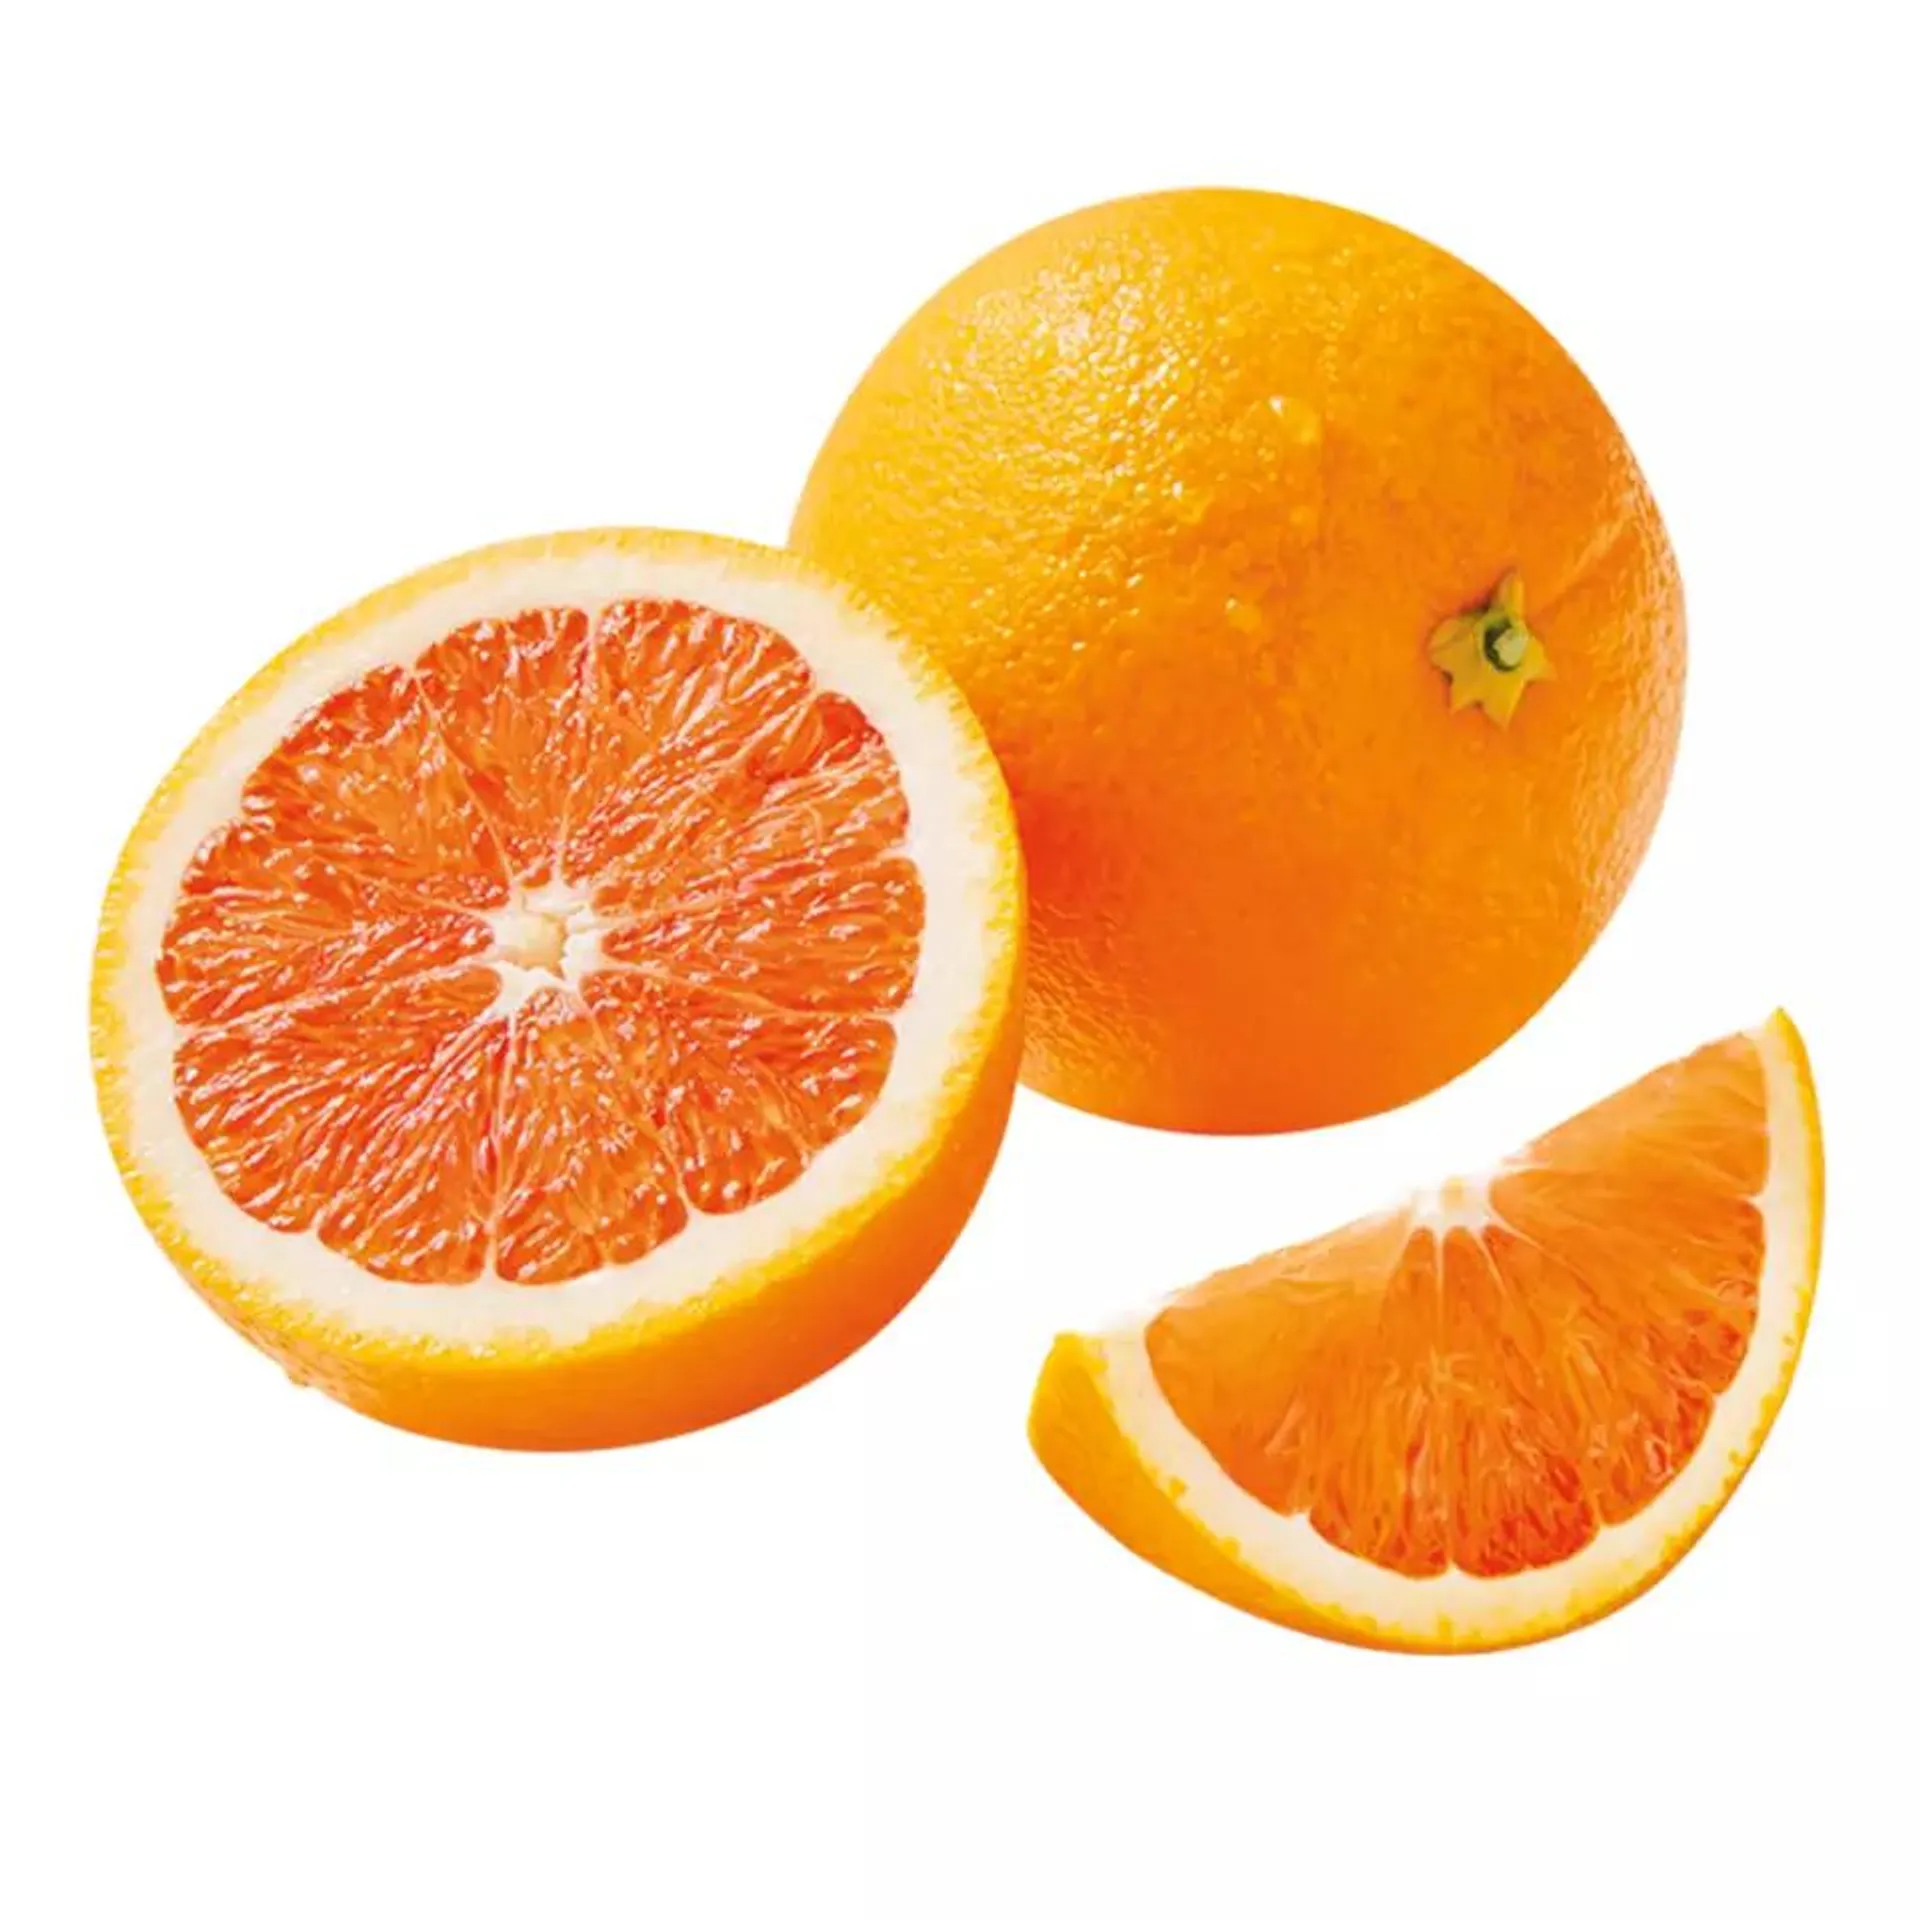 Cara Cara Oranges, 3 lb